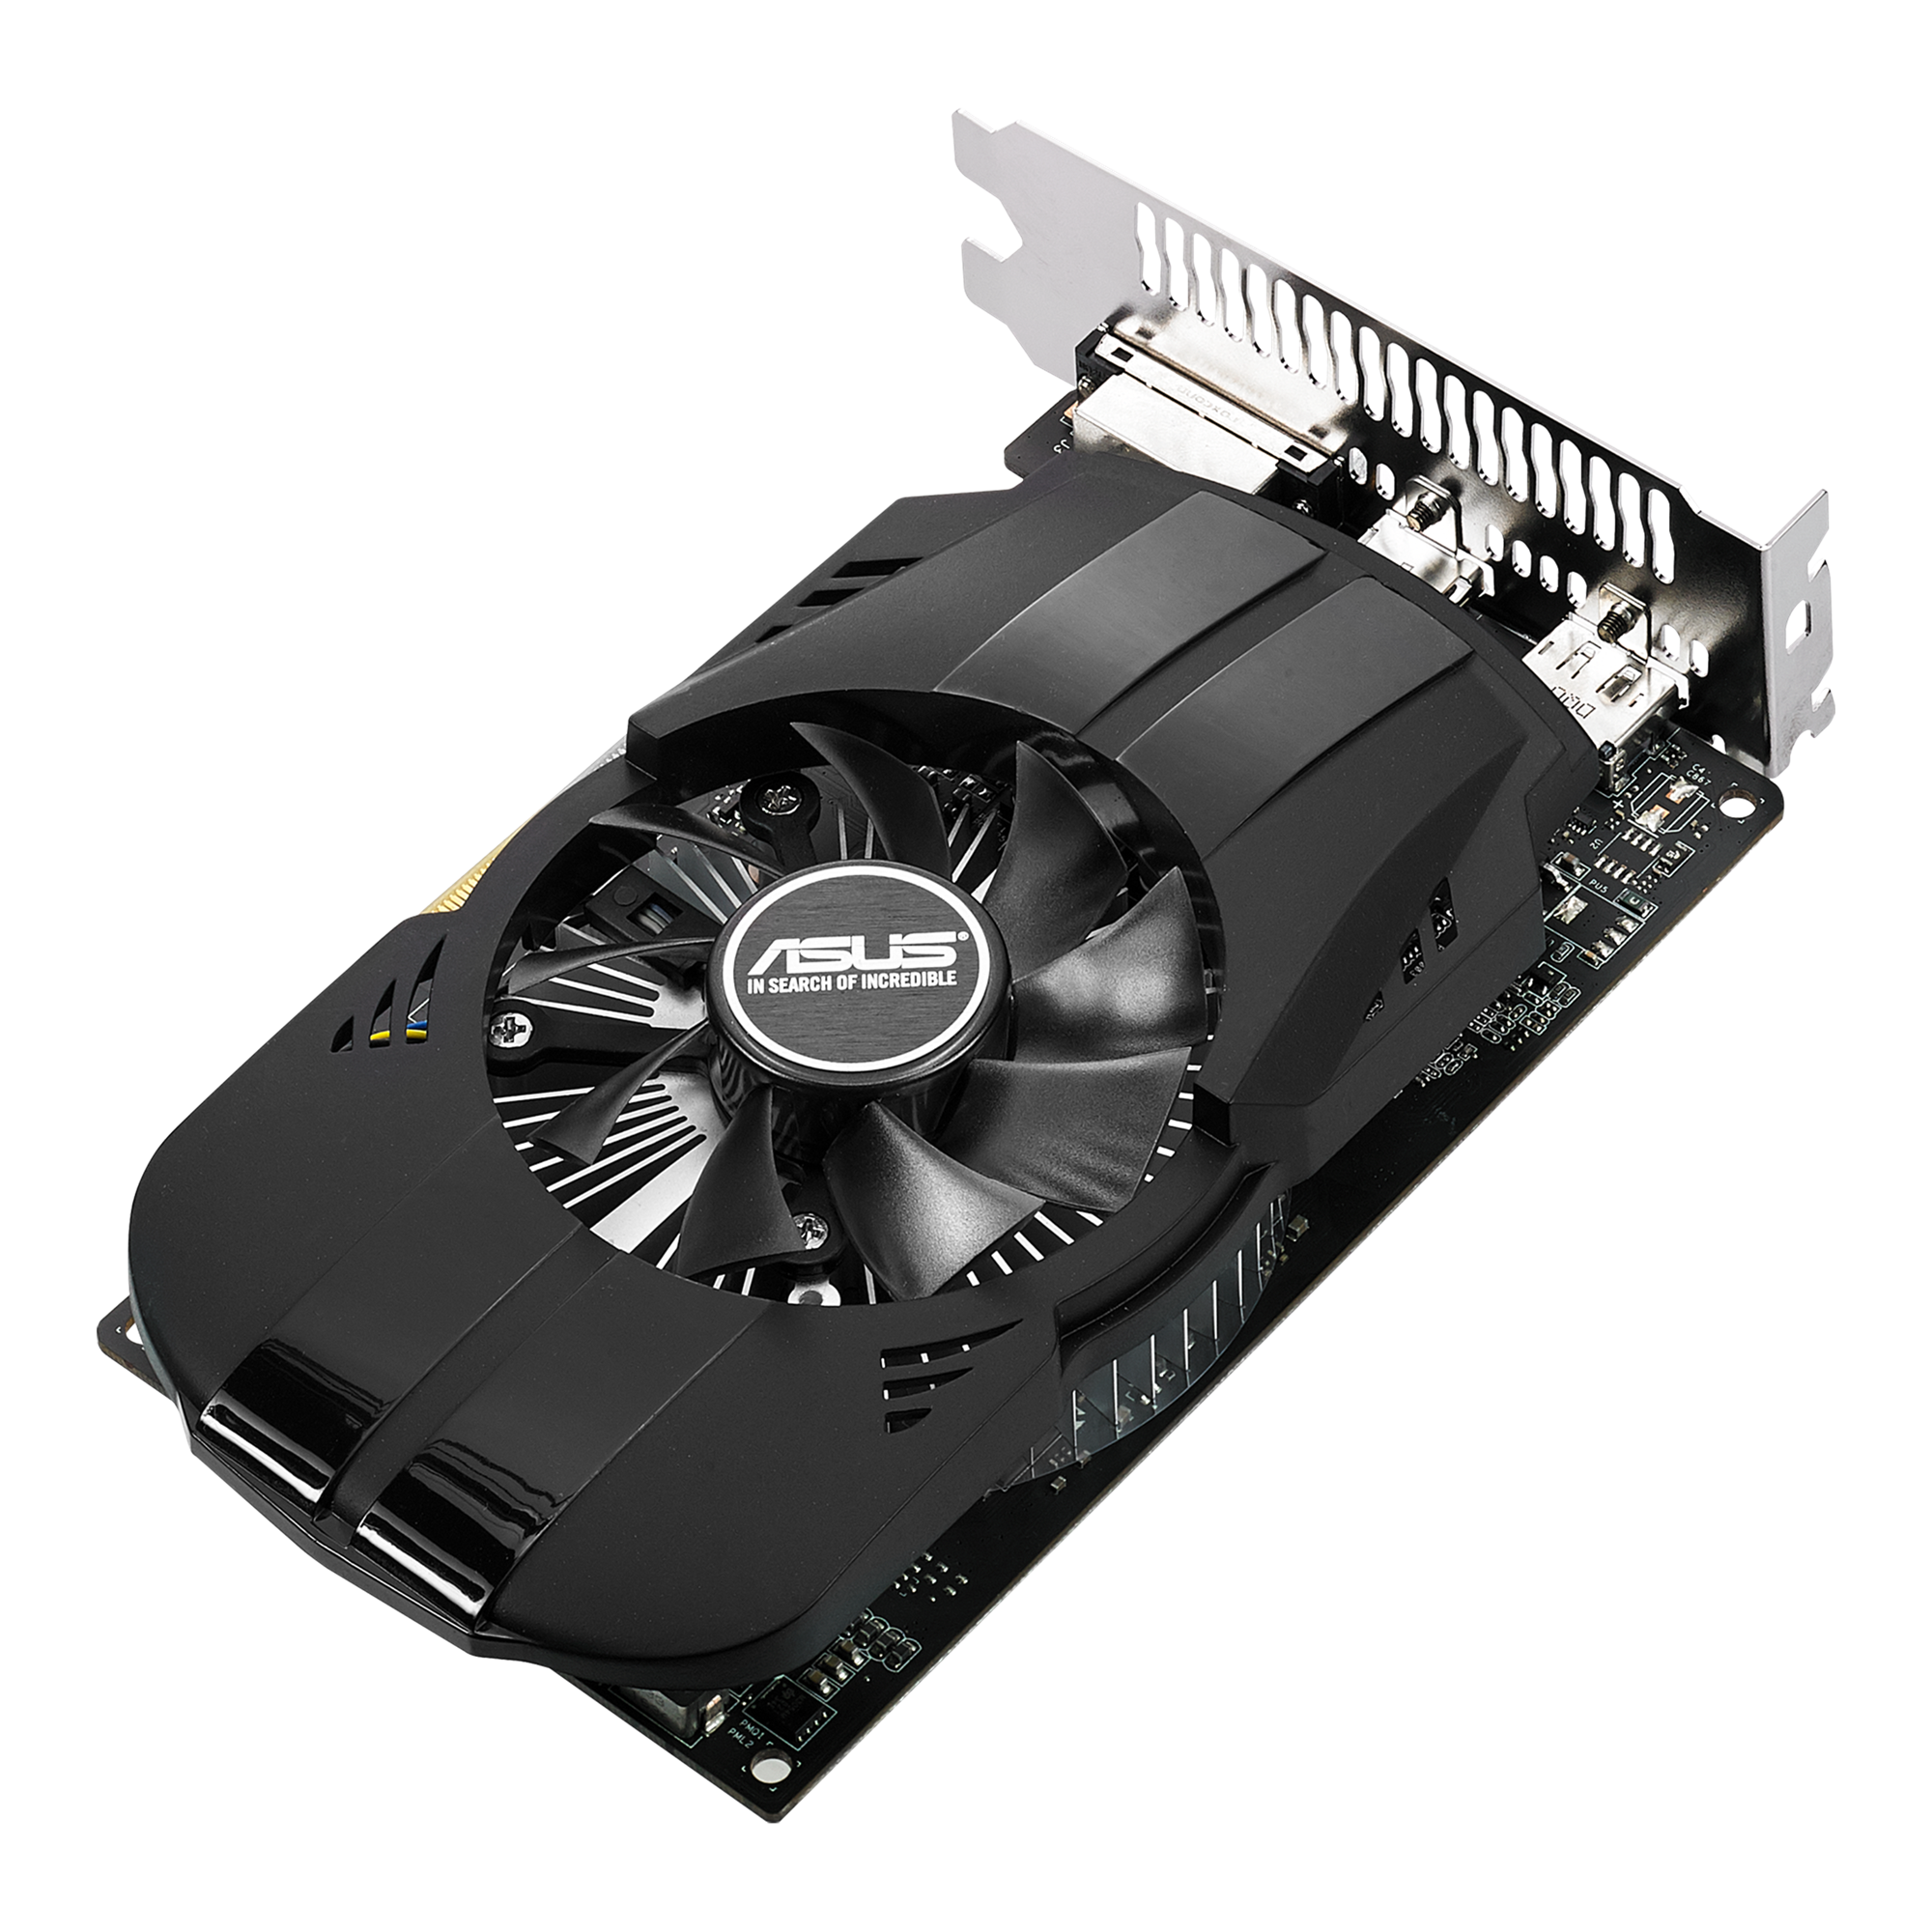 ASUS NVIDIA GeForce GTX1050ti 4GB